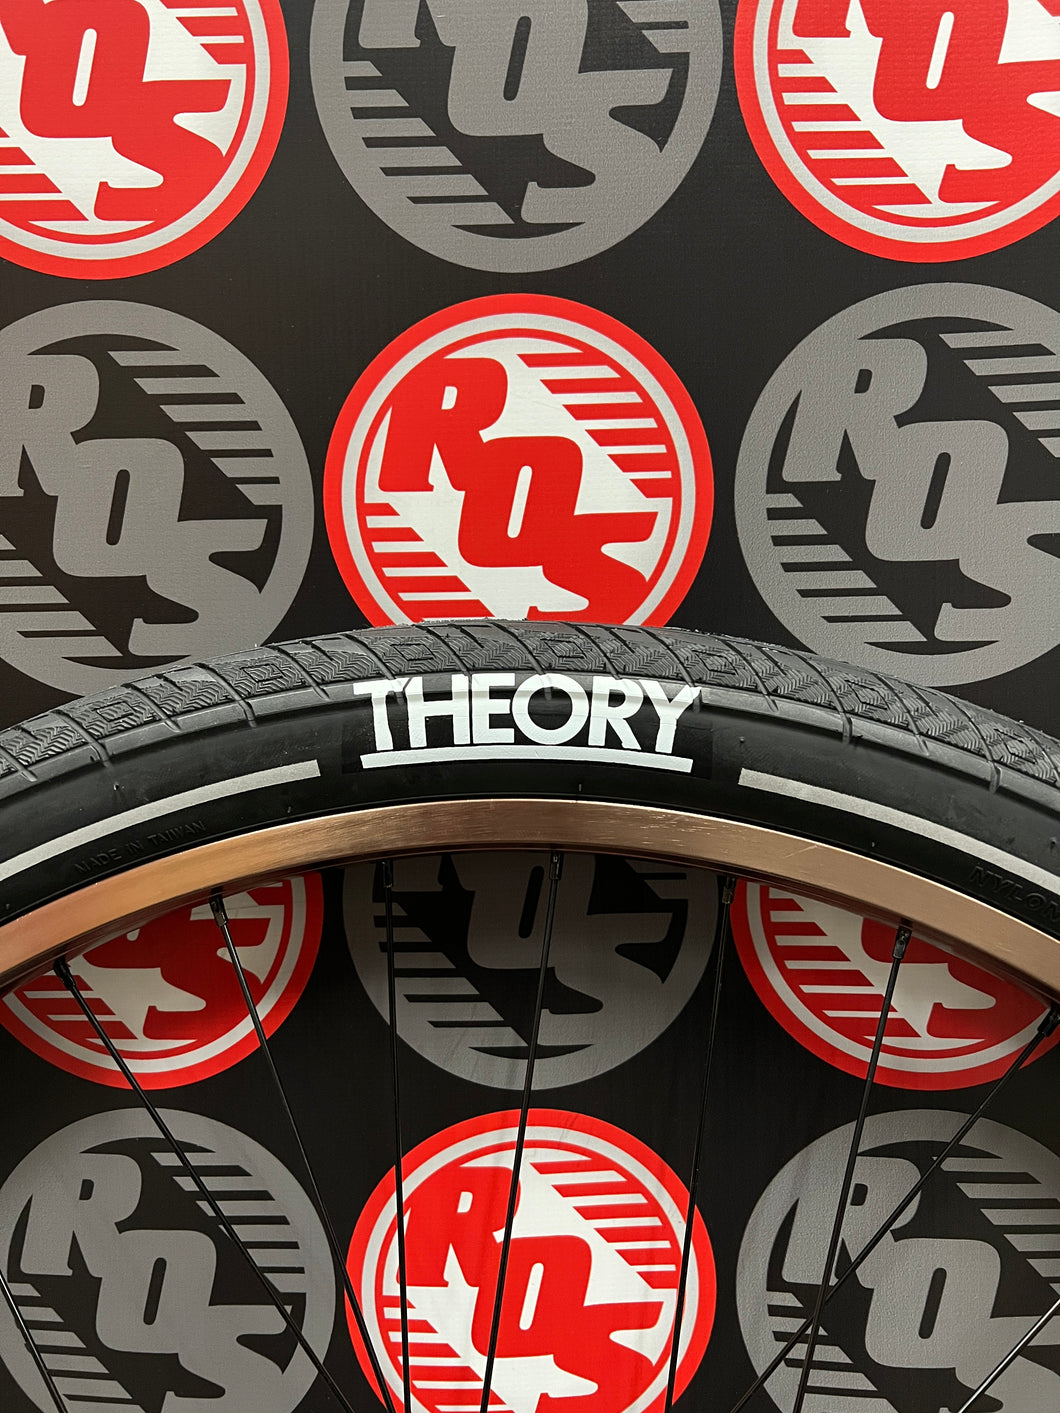 Theory Method Tire